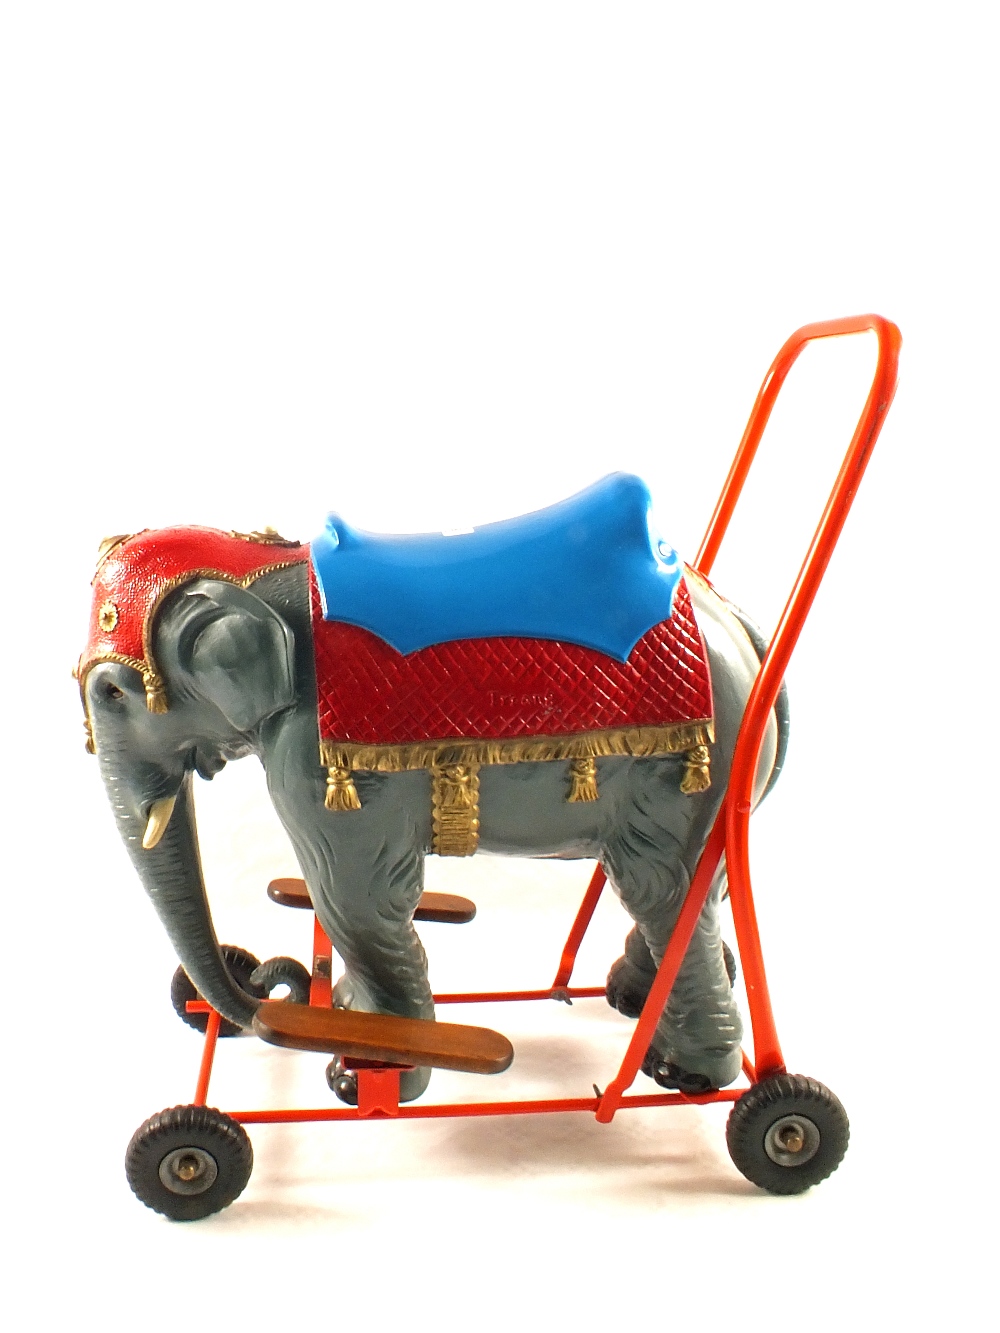 A Triang push along elephant